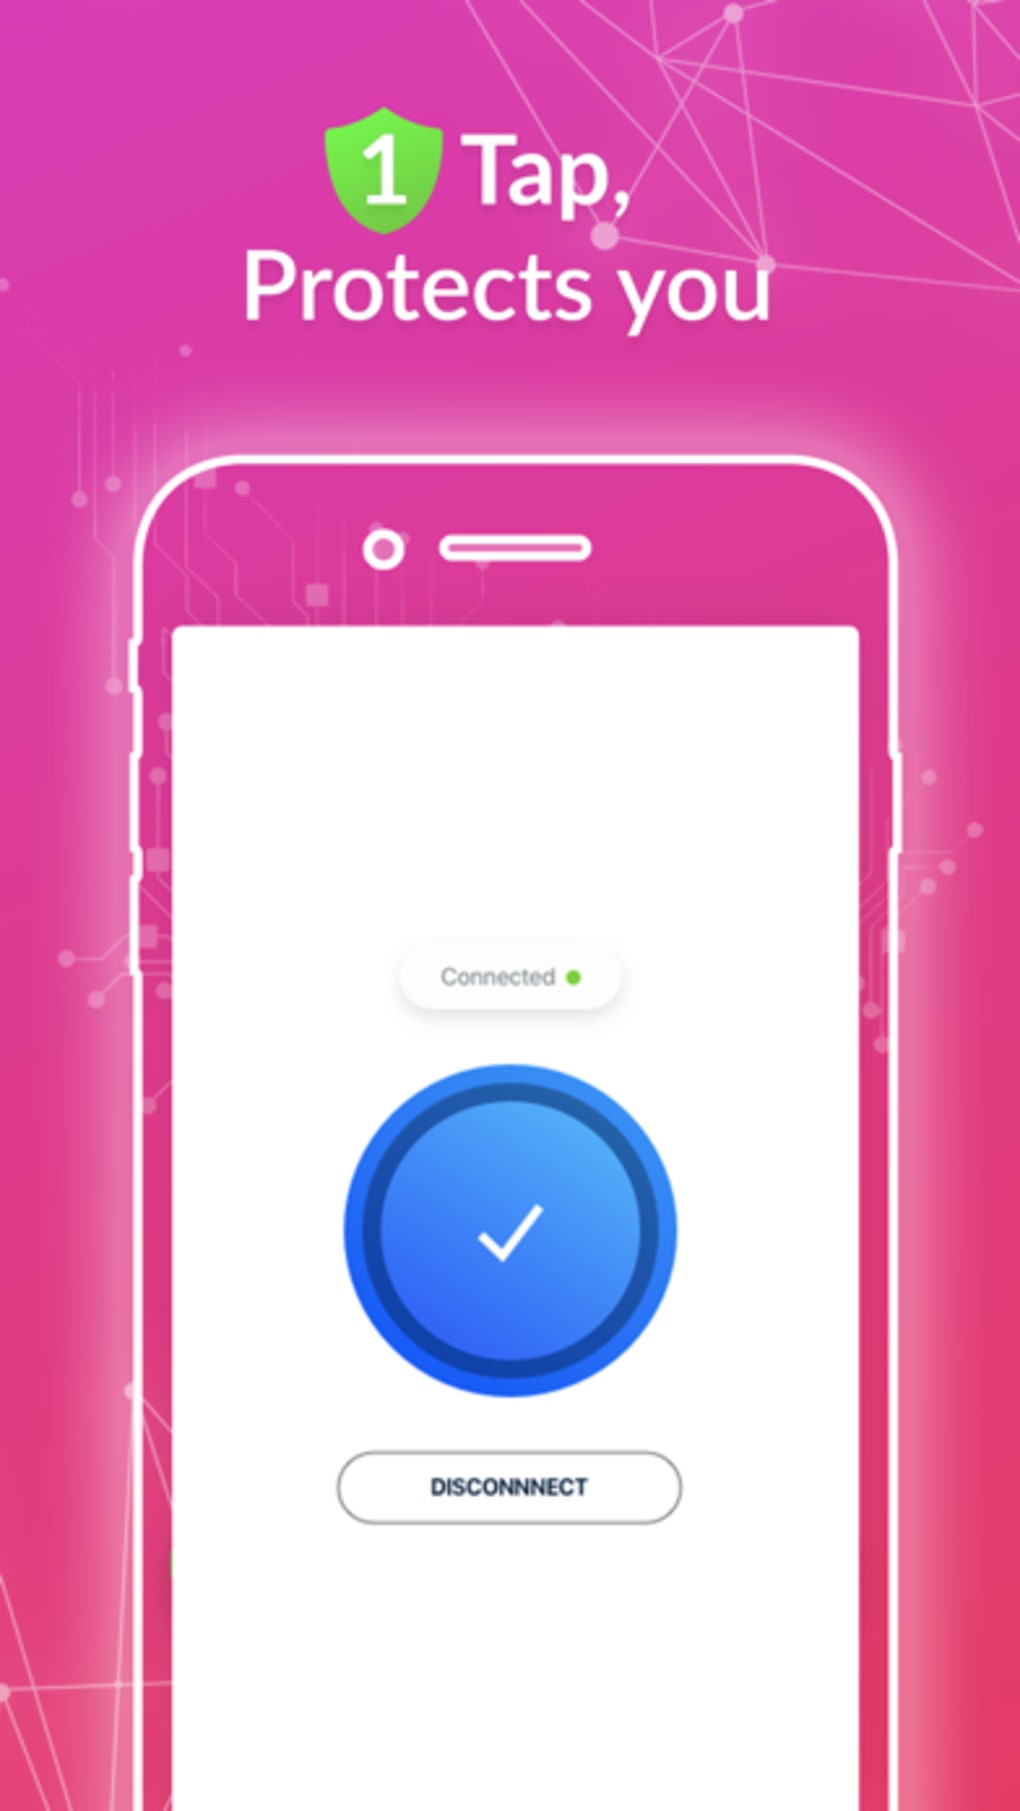 Simontok Ios : Simontox App Terbaru 2019 | Simontox For iPhone & Android - Aplikasi pemersatu ...